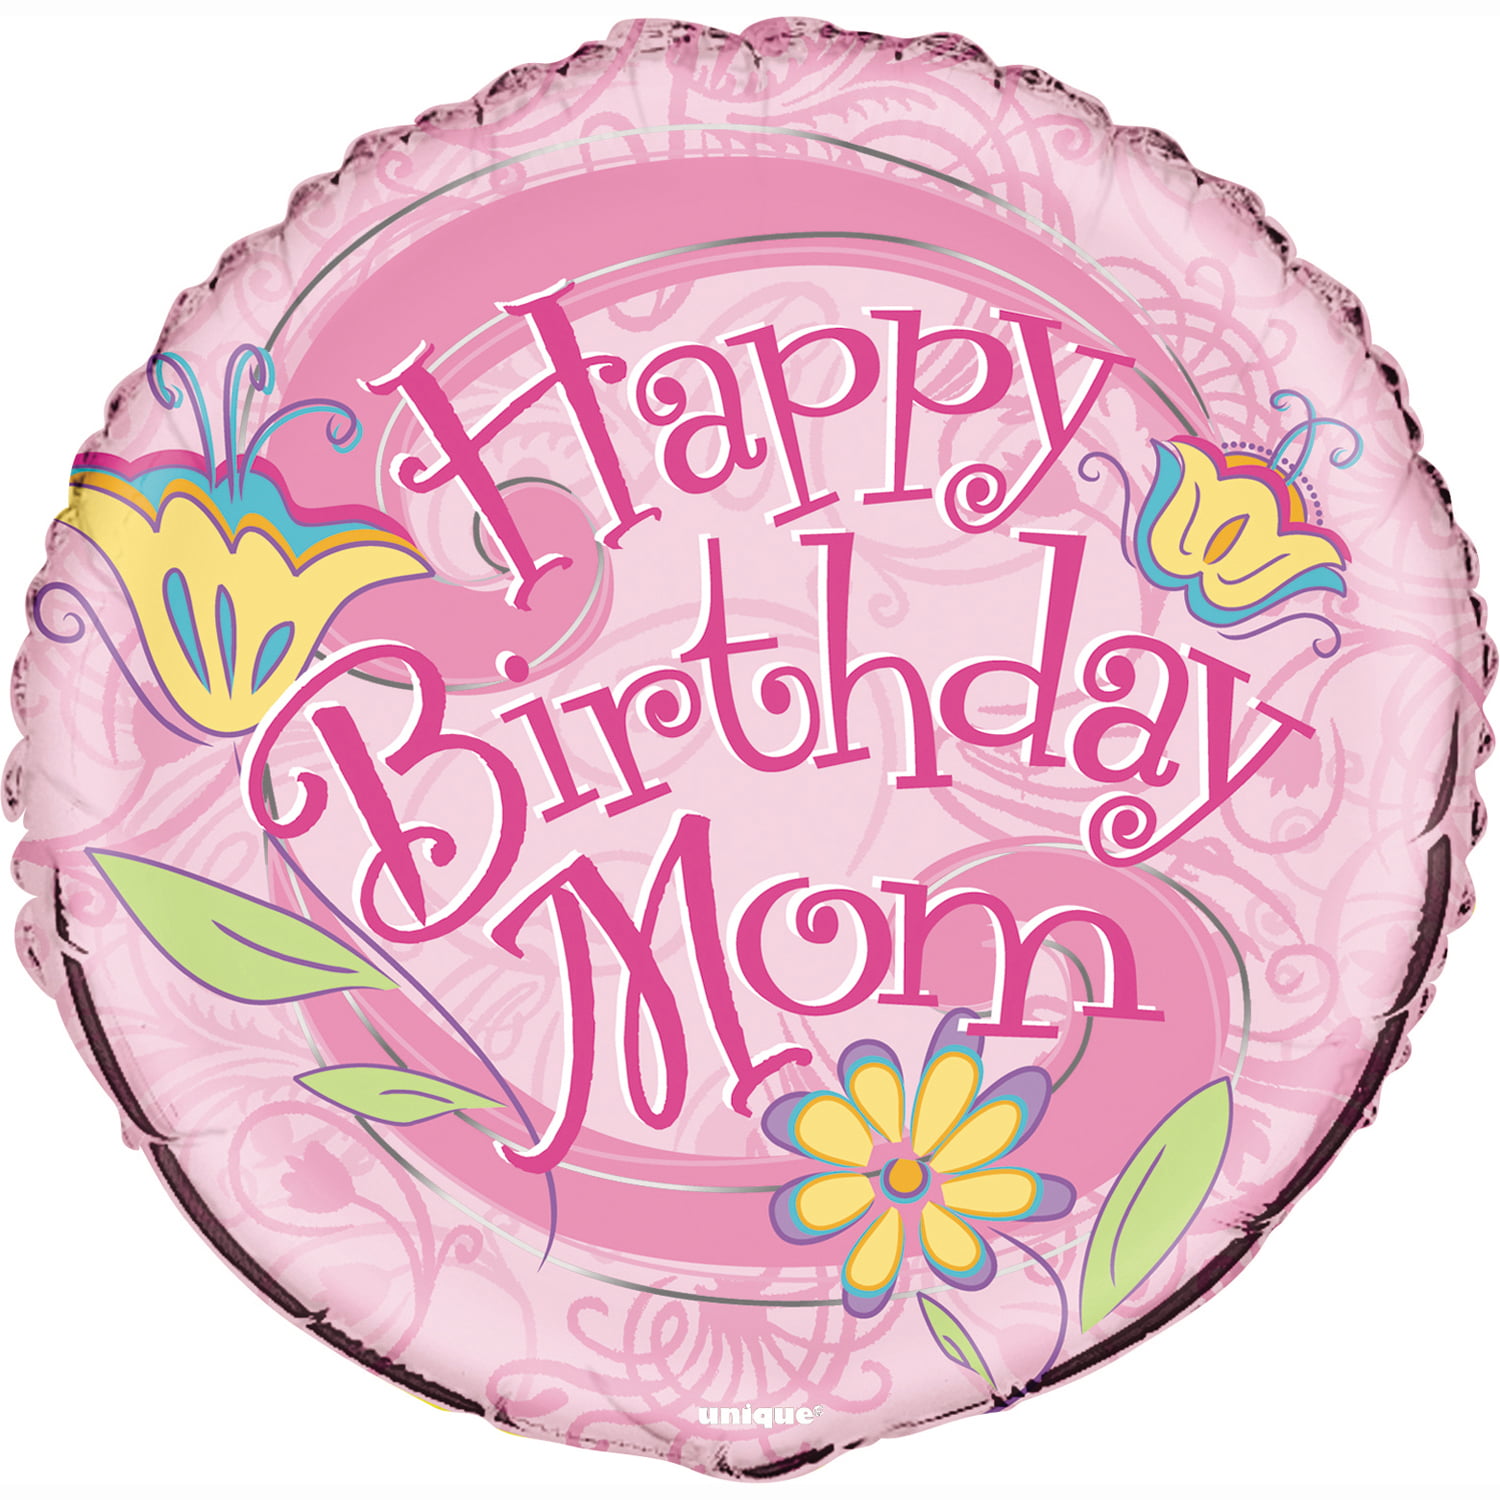 18" Foil Floral Happy Birthday Mom Balloon - Walmart.com 